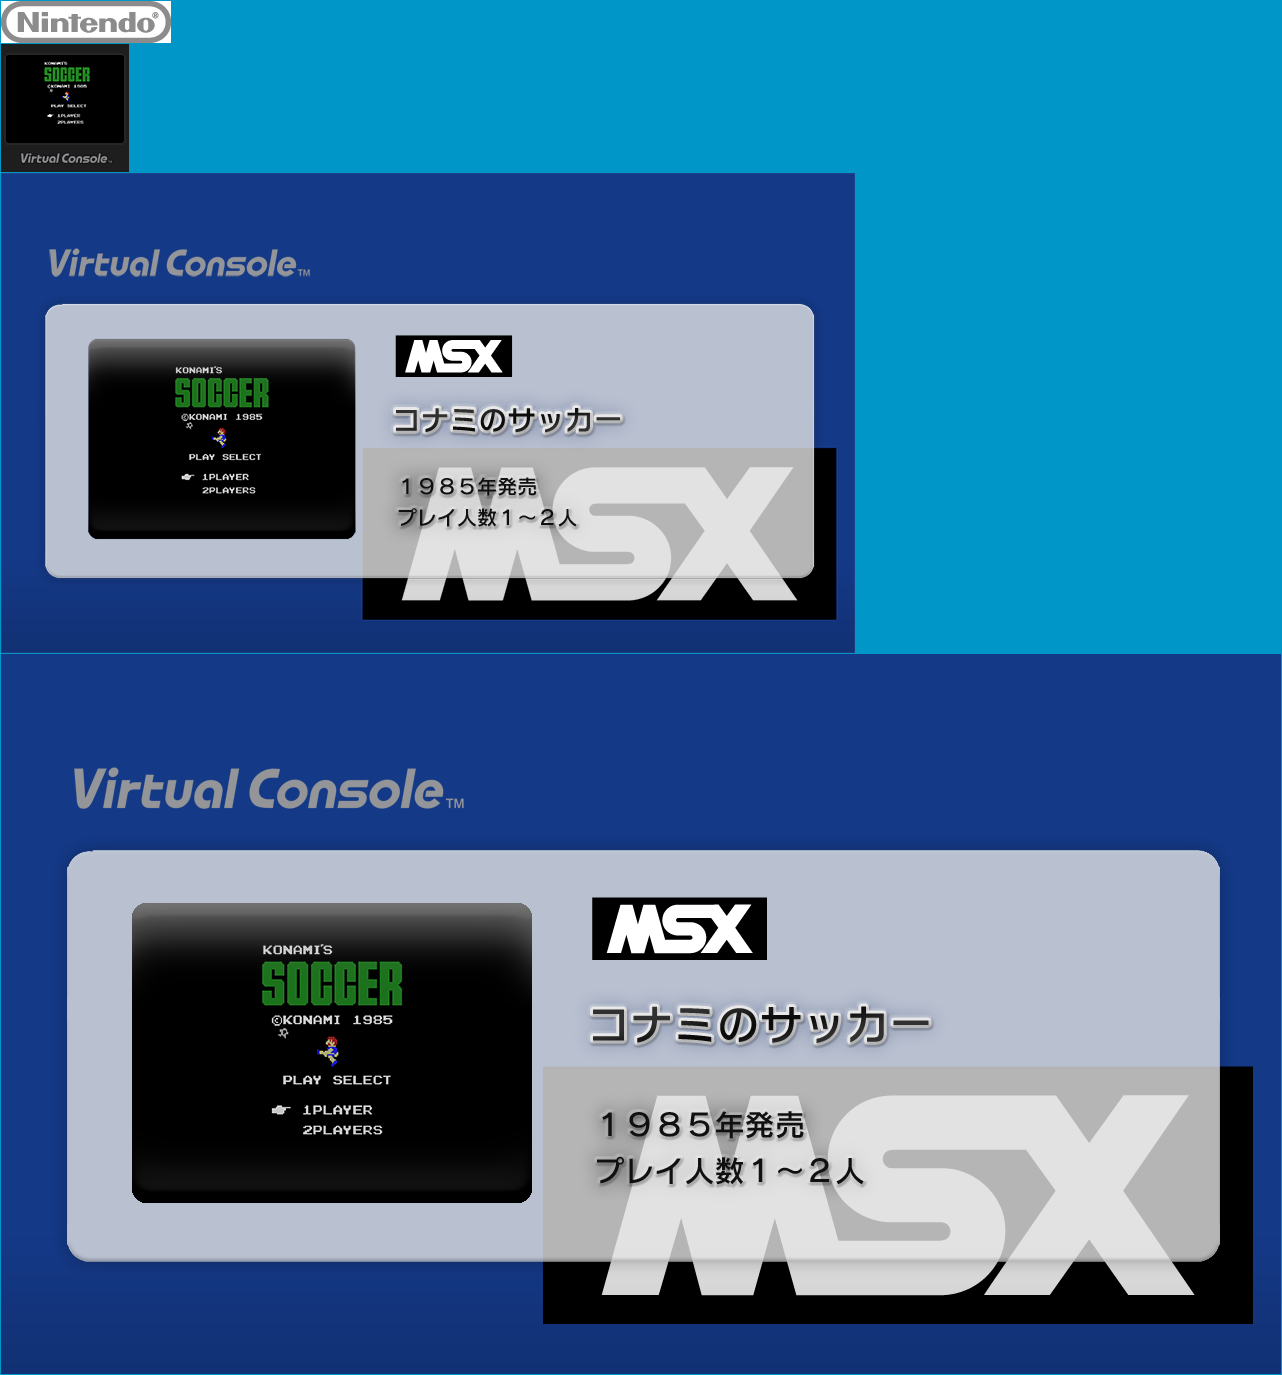 Virtual Console - Konami's Soccer